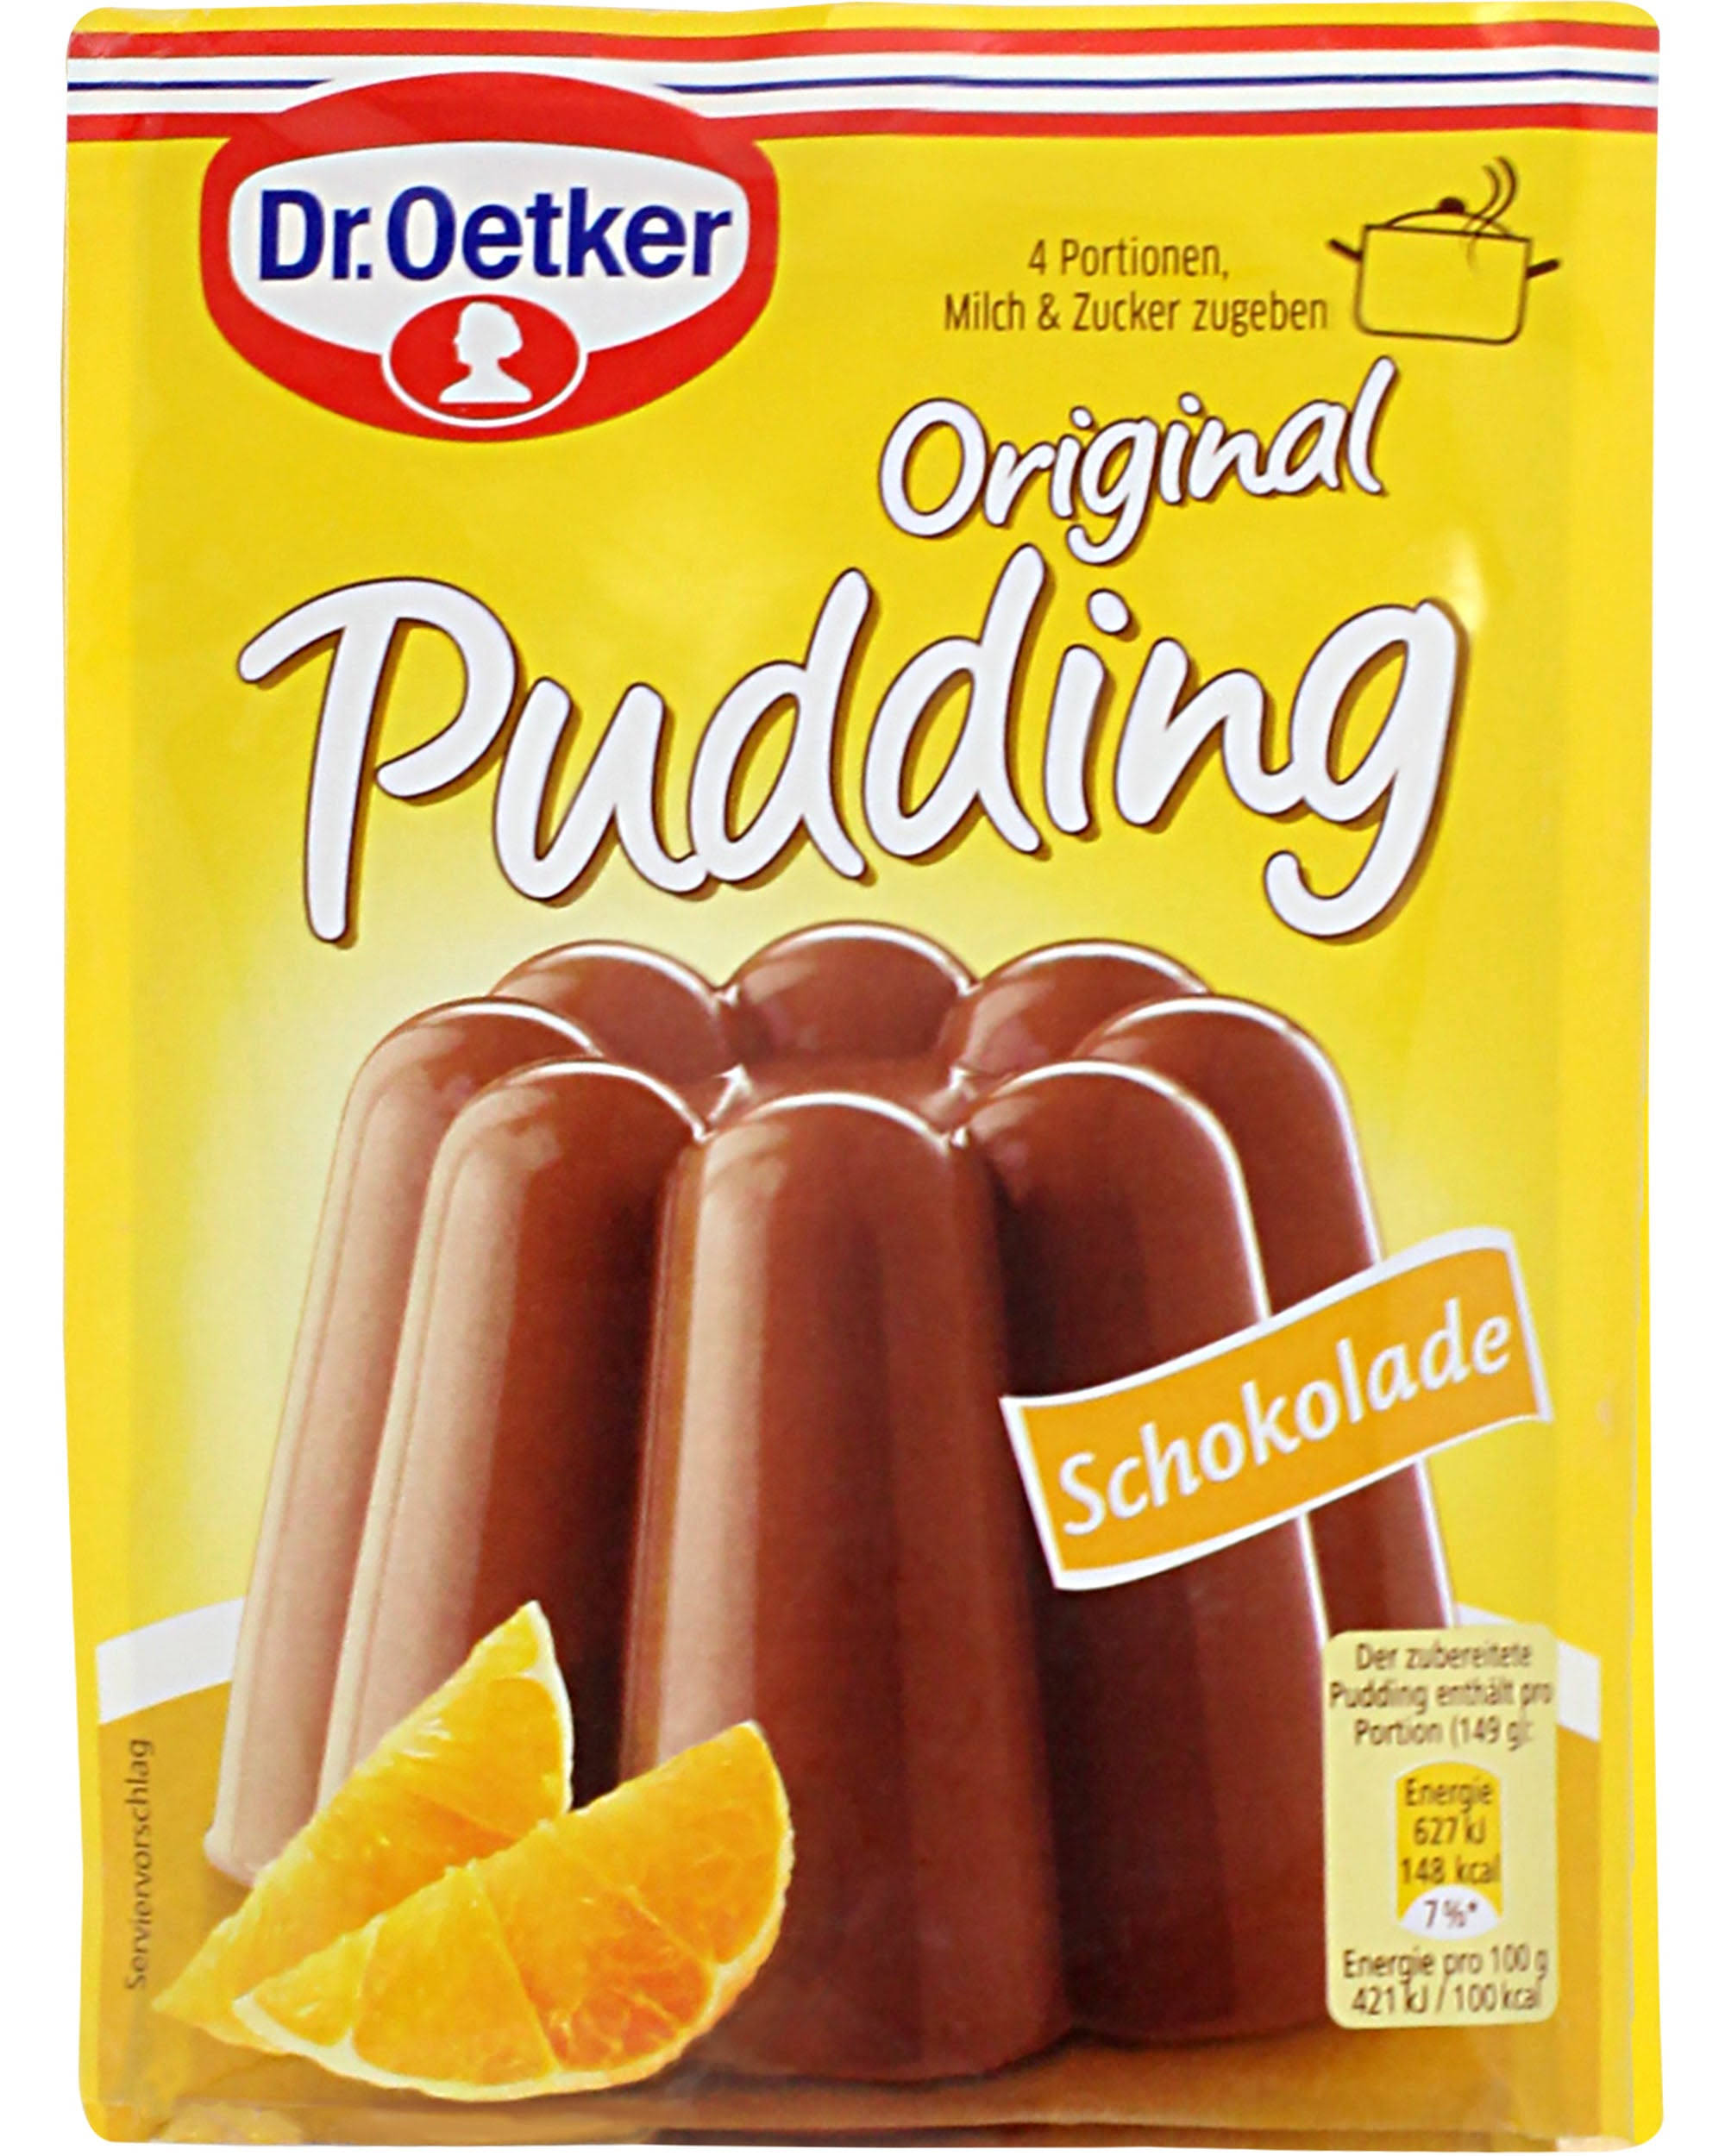 Dr Oetker Original Pudding - Chocolate, Pack of 3